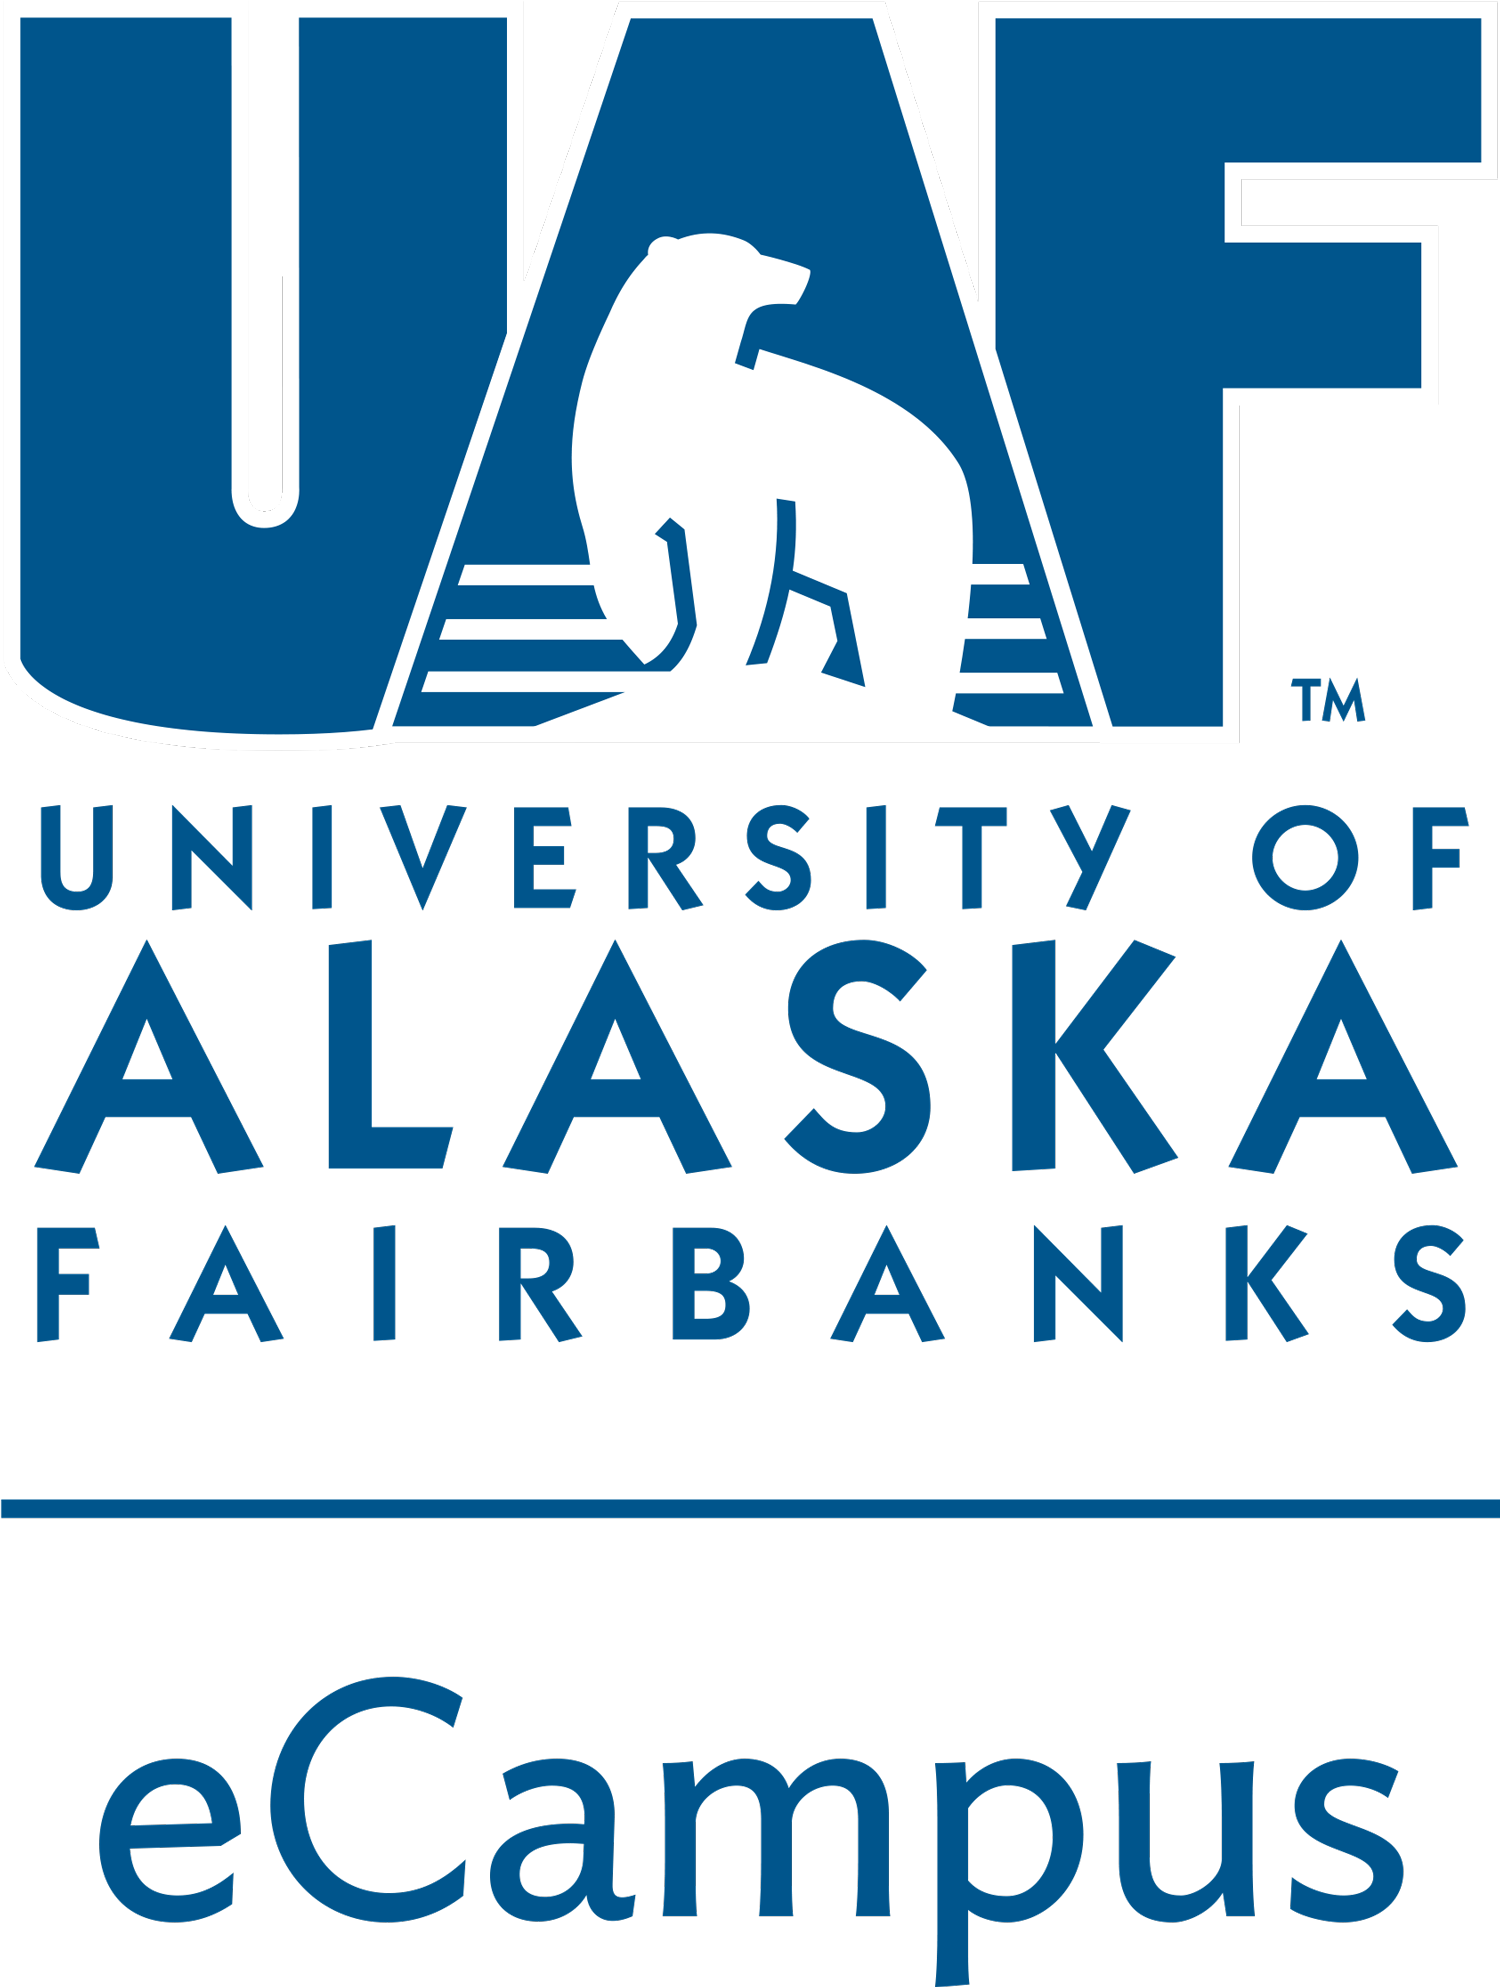 University of Alaska Fairbanks eCampus logo